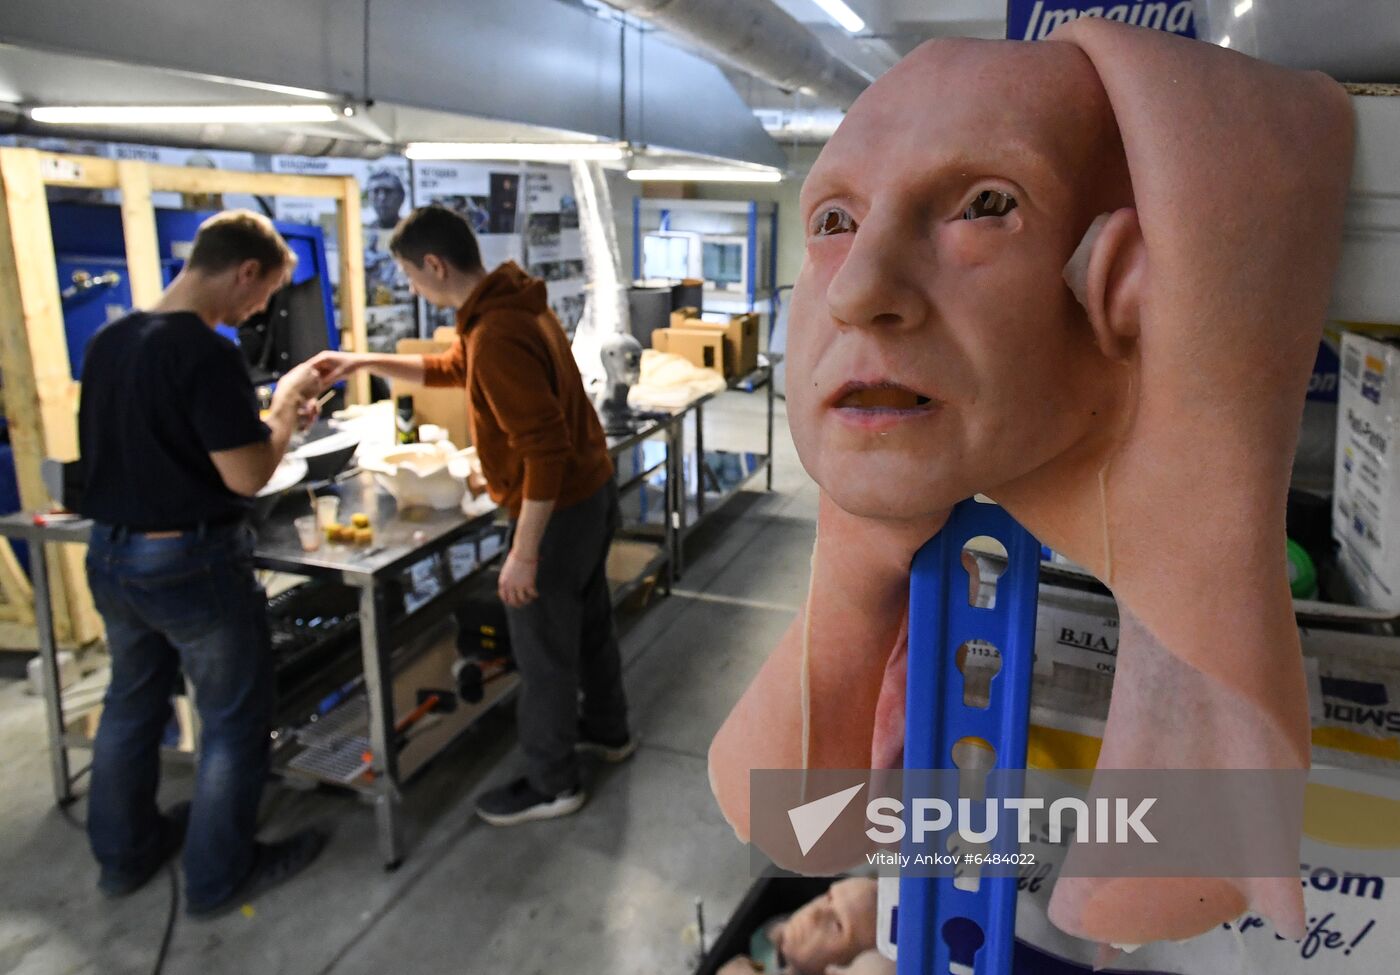 Russia Anthropomorphic Robots Manufacturing